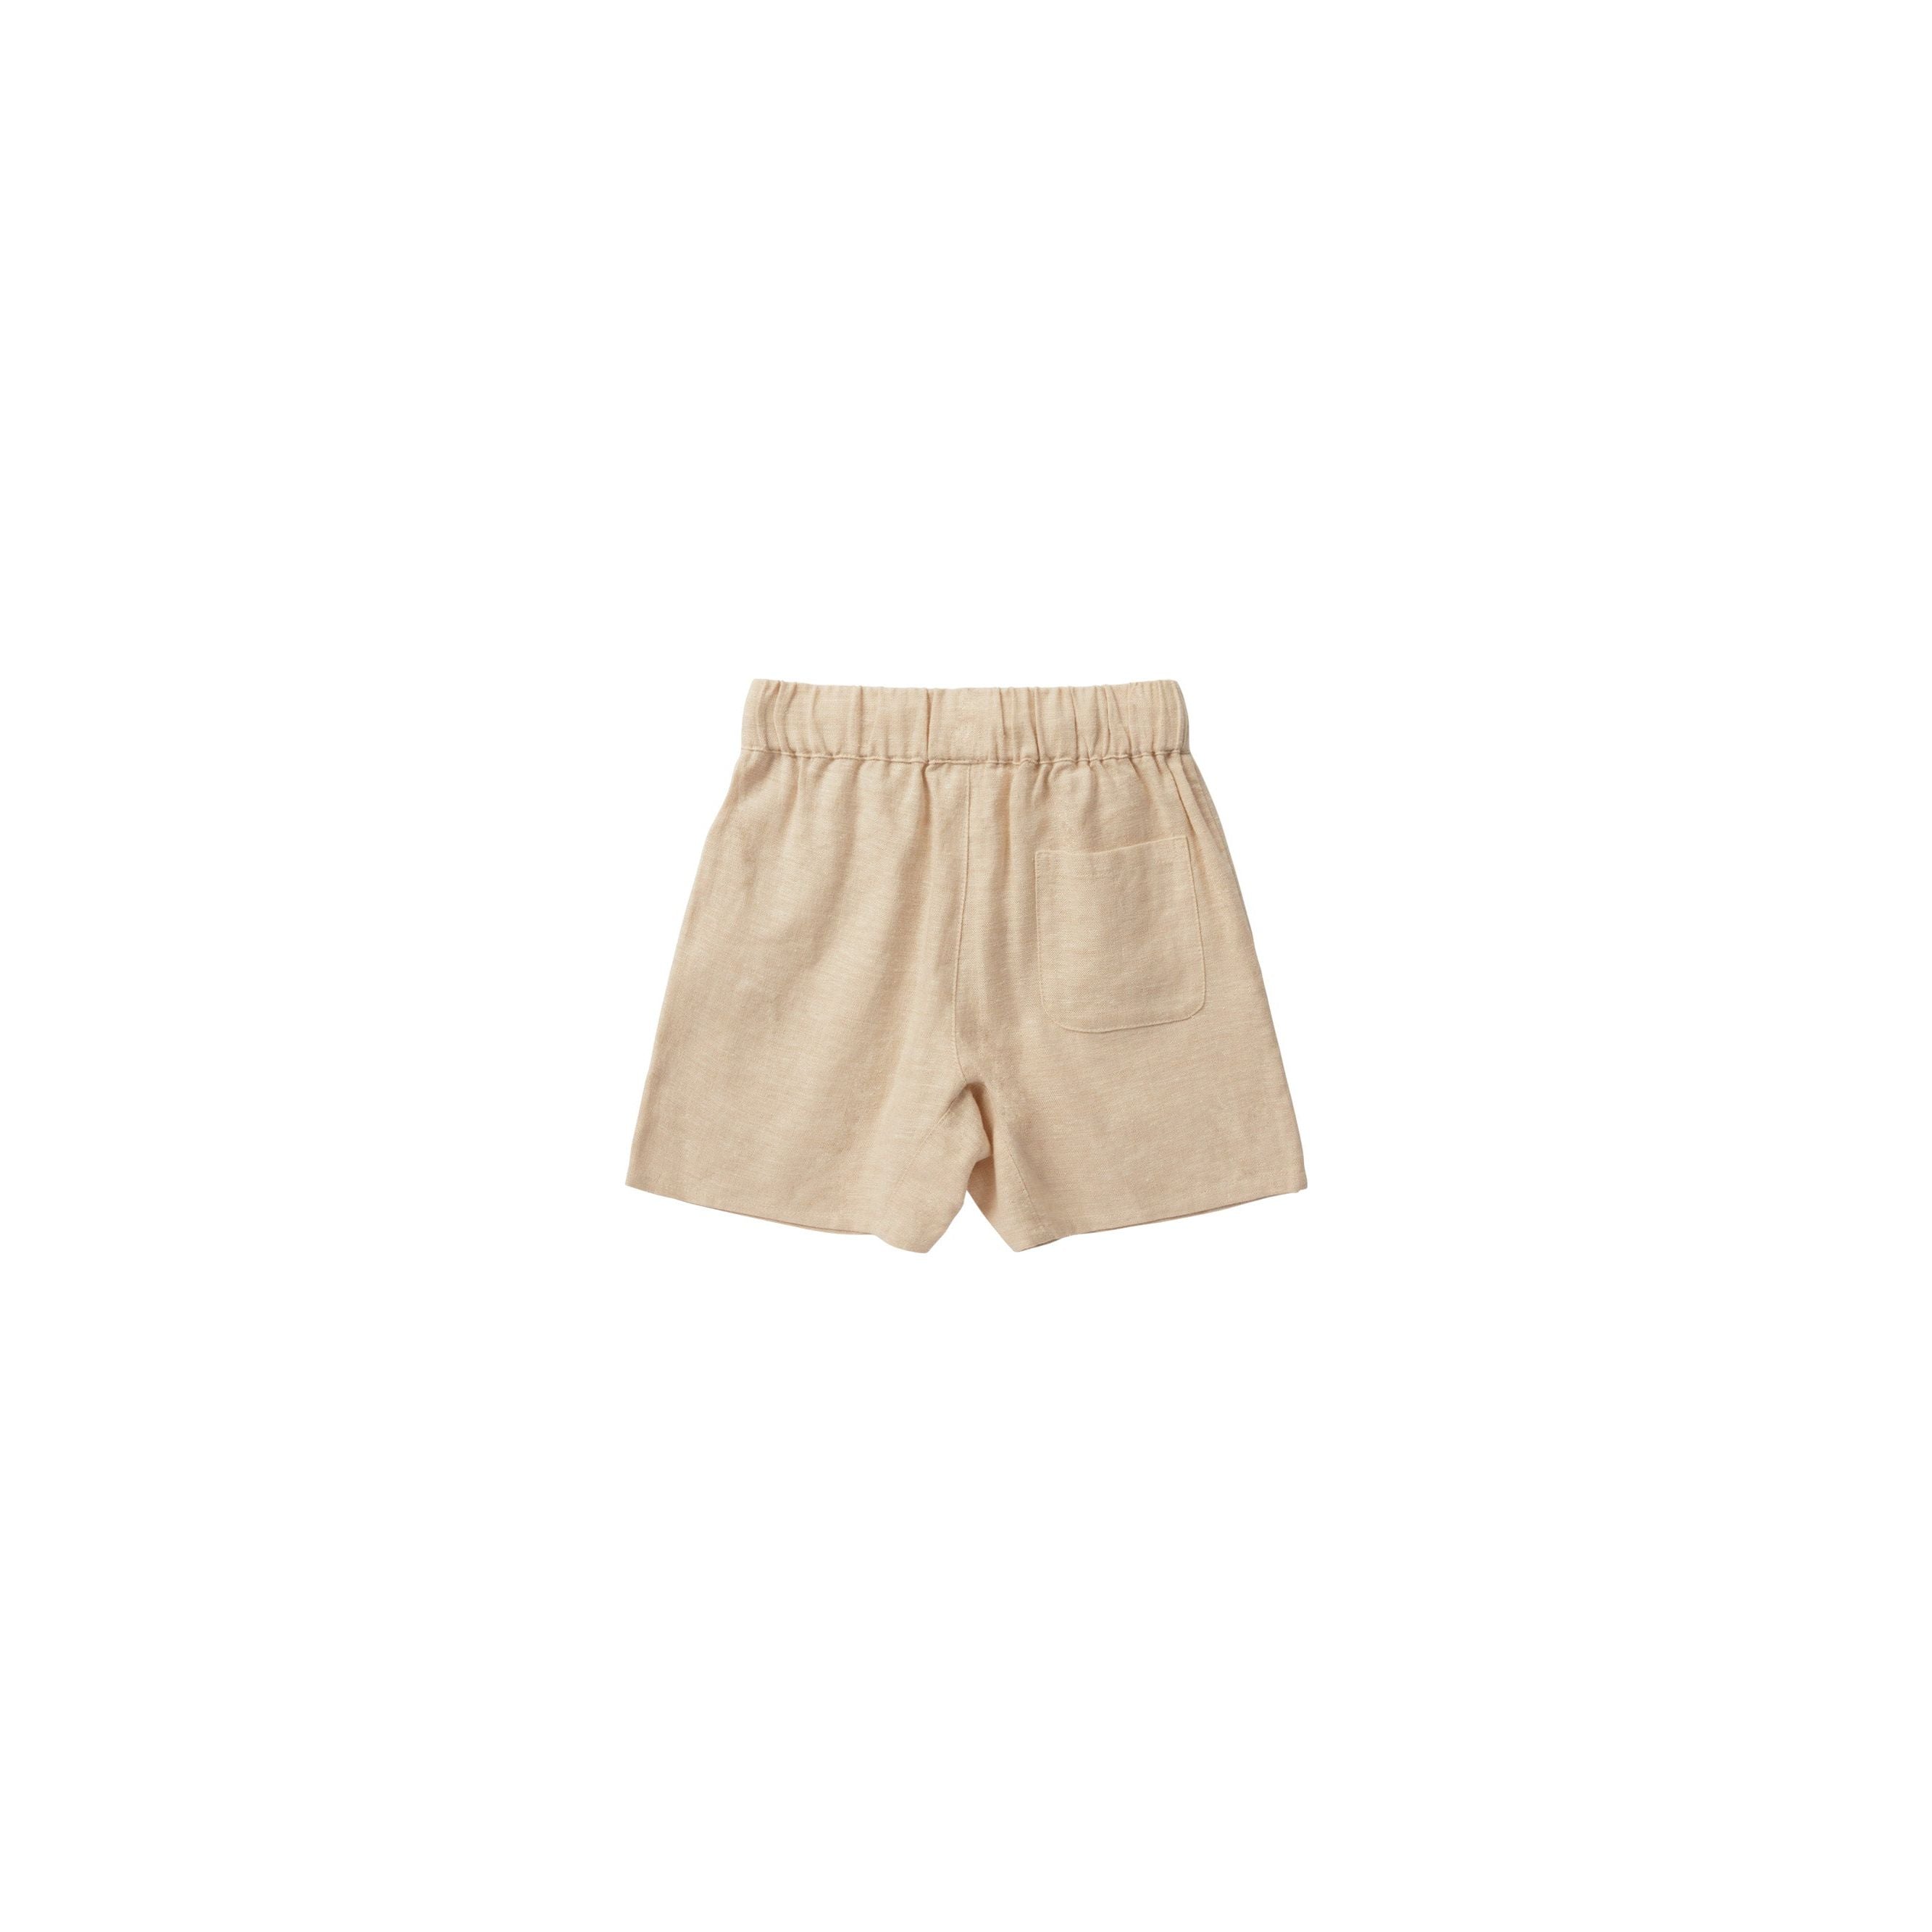 Bermuda Shorts - Heathered Sand